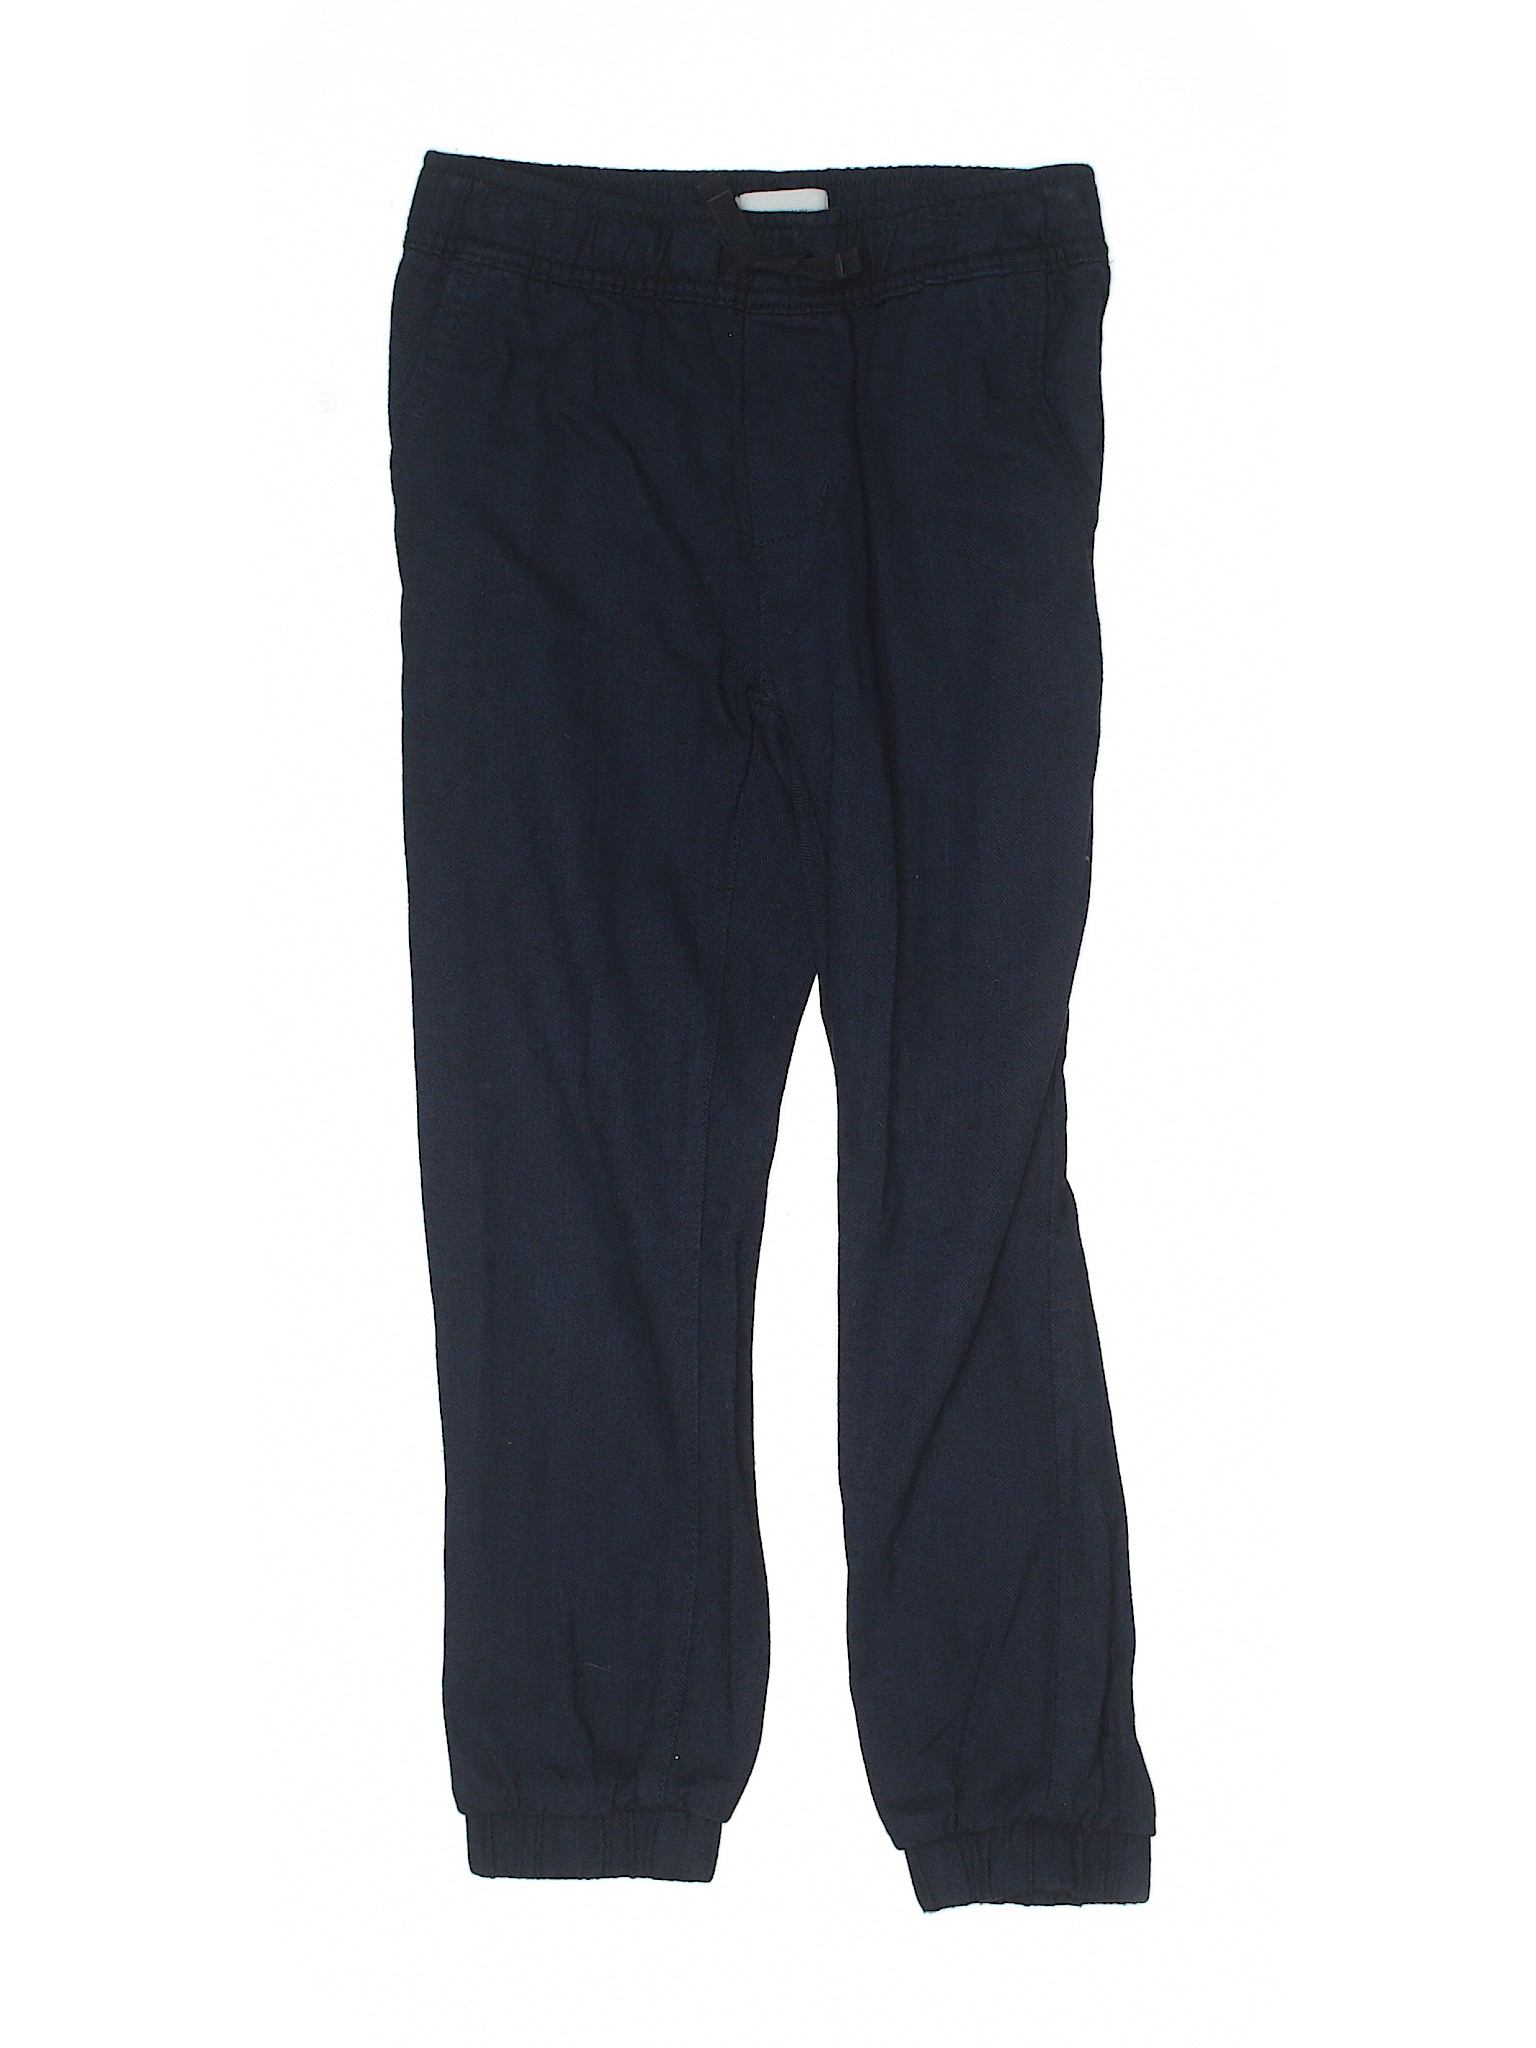 Old Navy Boys Black Casual Pants 6 | eBay